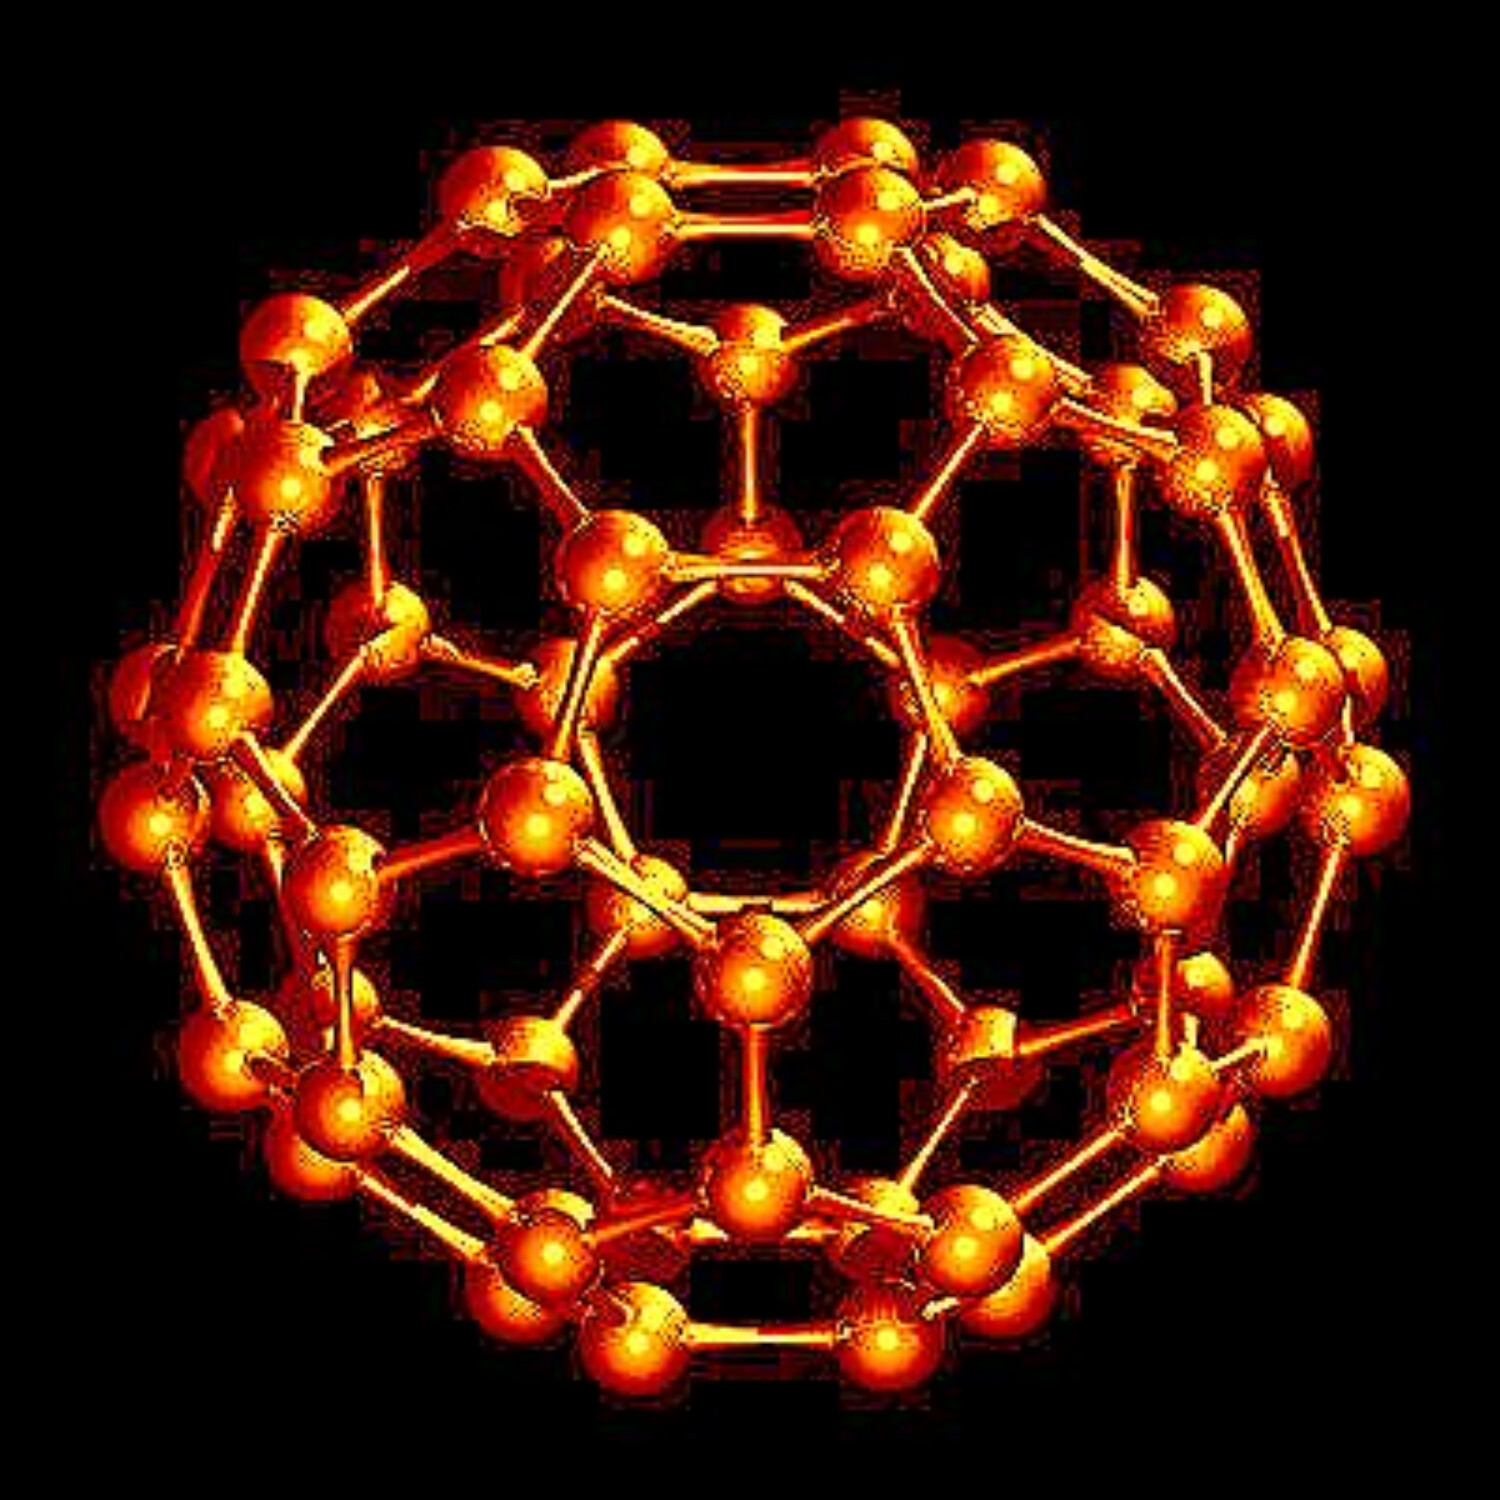 "SHUNGITE REALITY” 10/19/21 - Graphene Oxide Under a Microscope